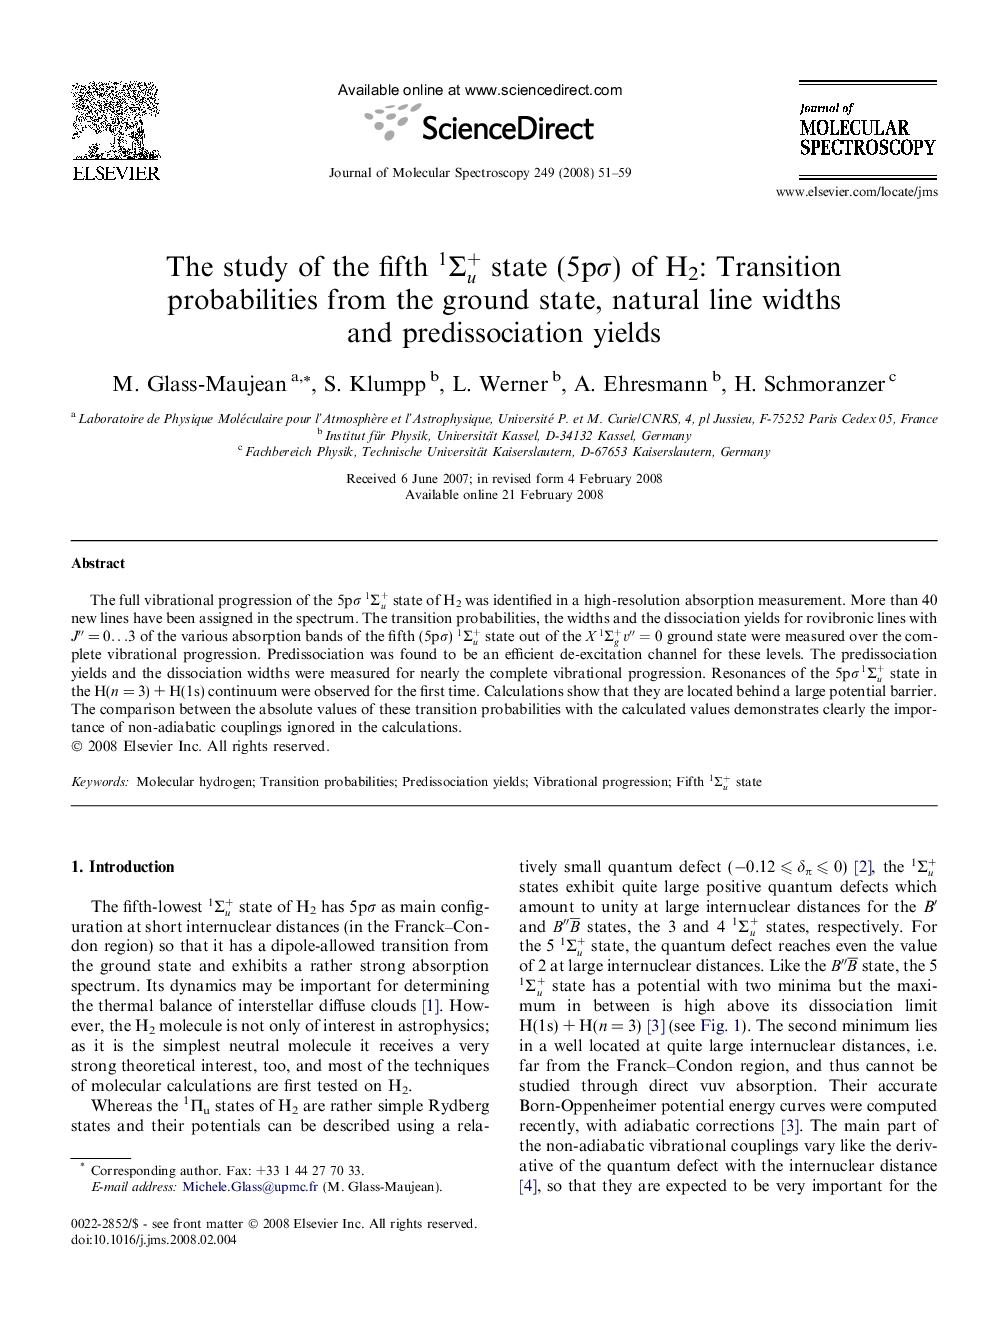 The study of the fifth 1Î£u+ state (5pÏ) of H2: Transition probabilities from the ground state, natural line widths and predissociation yields